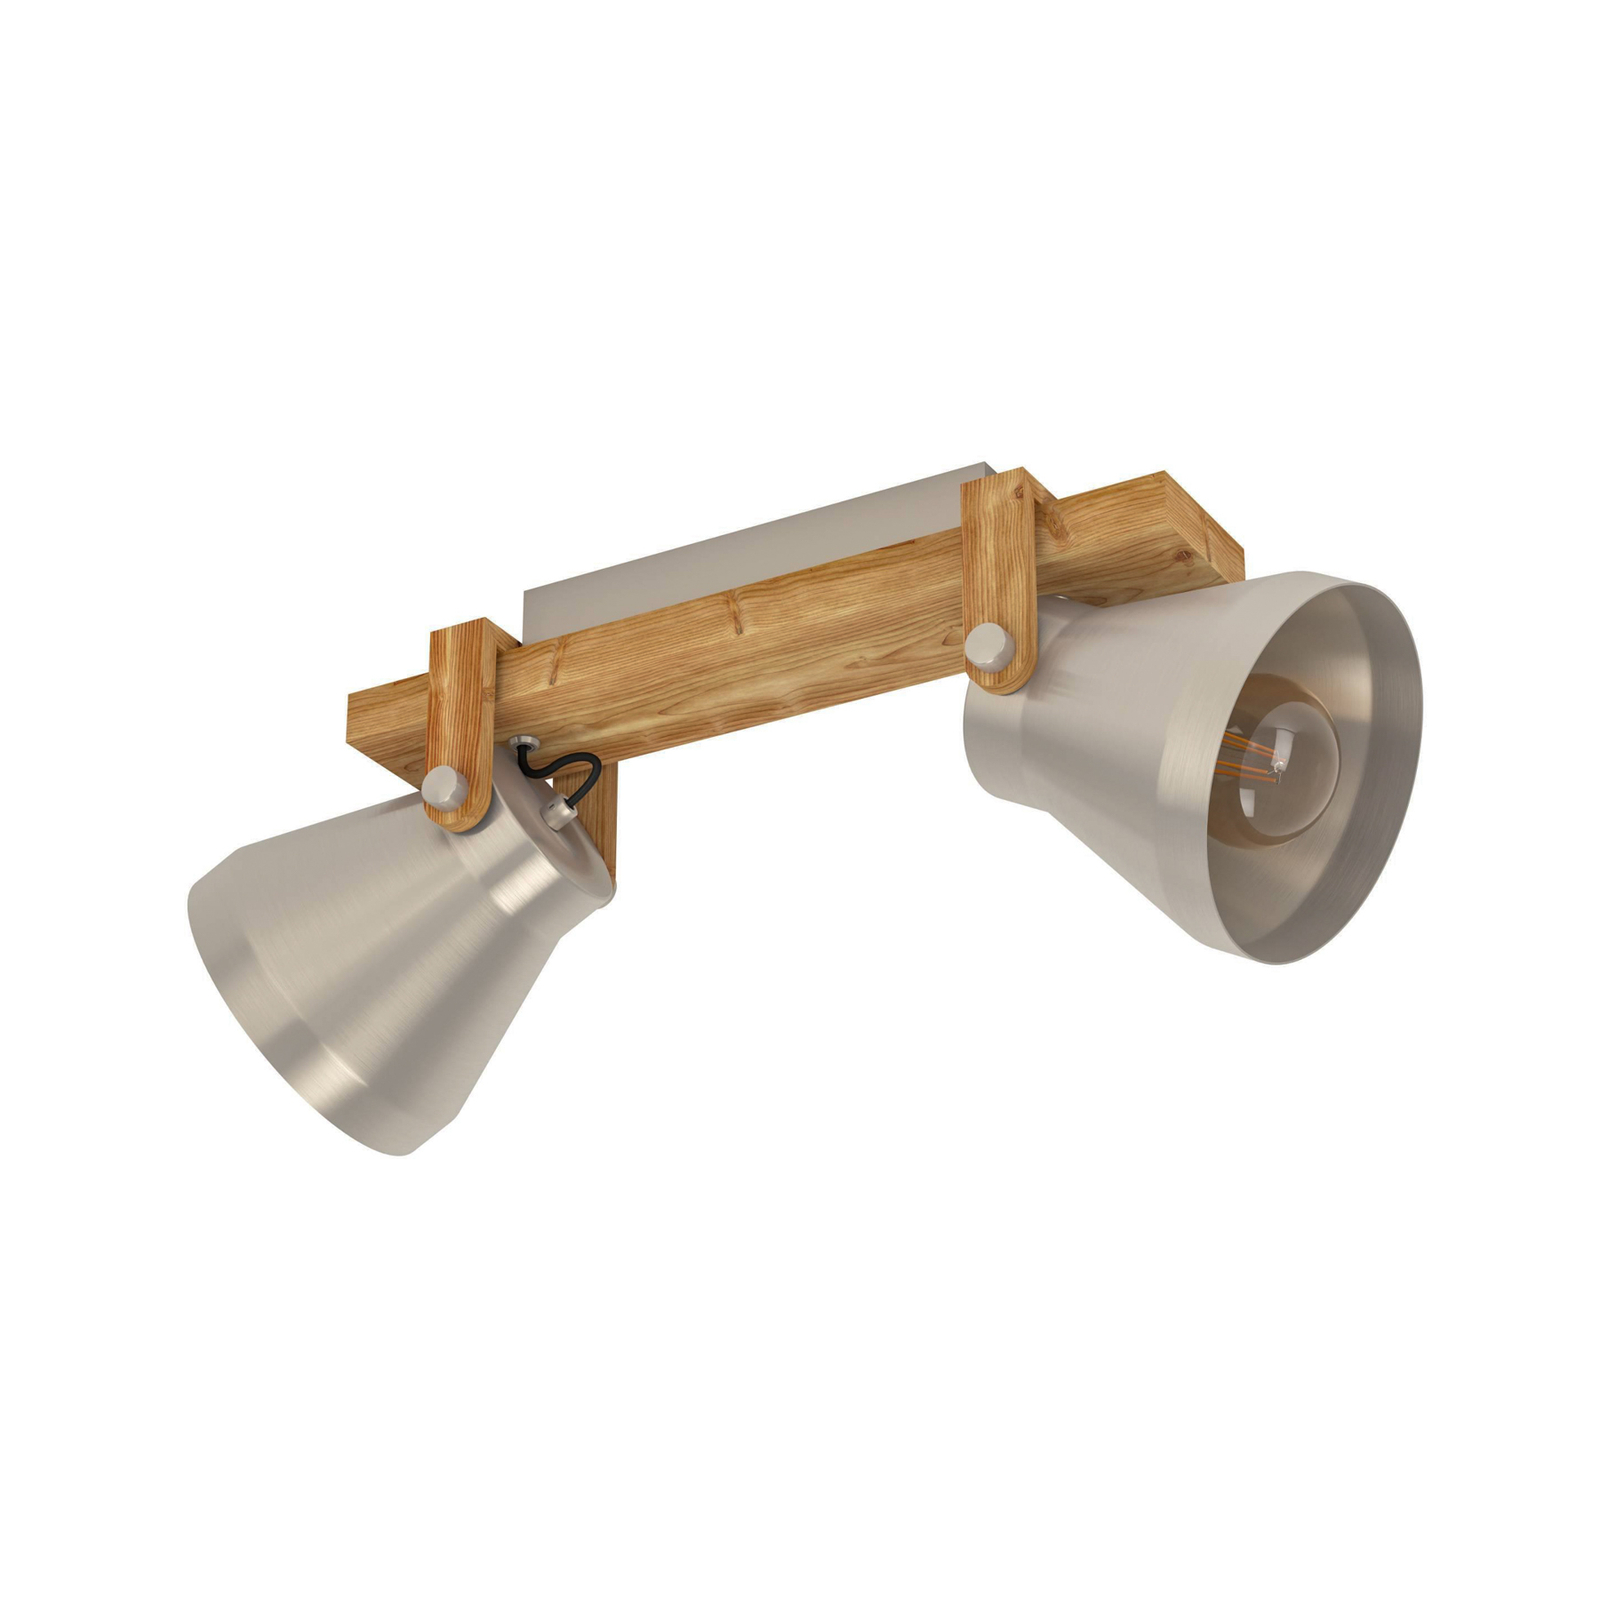 Cawton downlight, length 58.5 cm, steel/brown, 2-bulb.